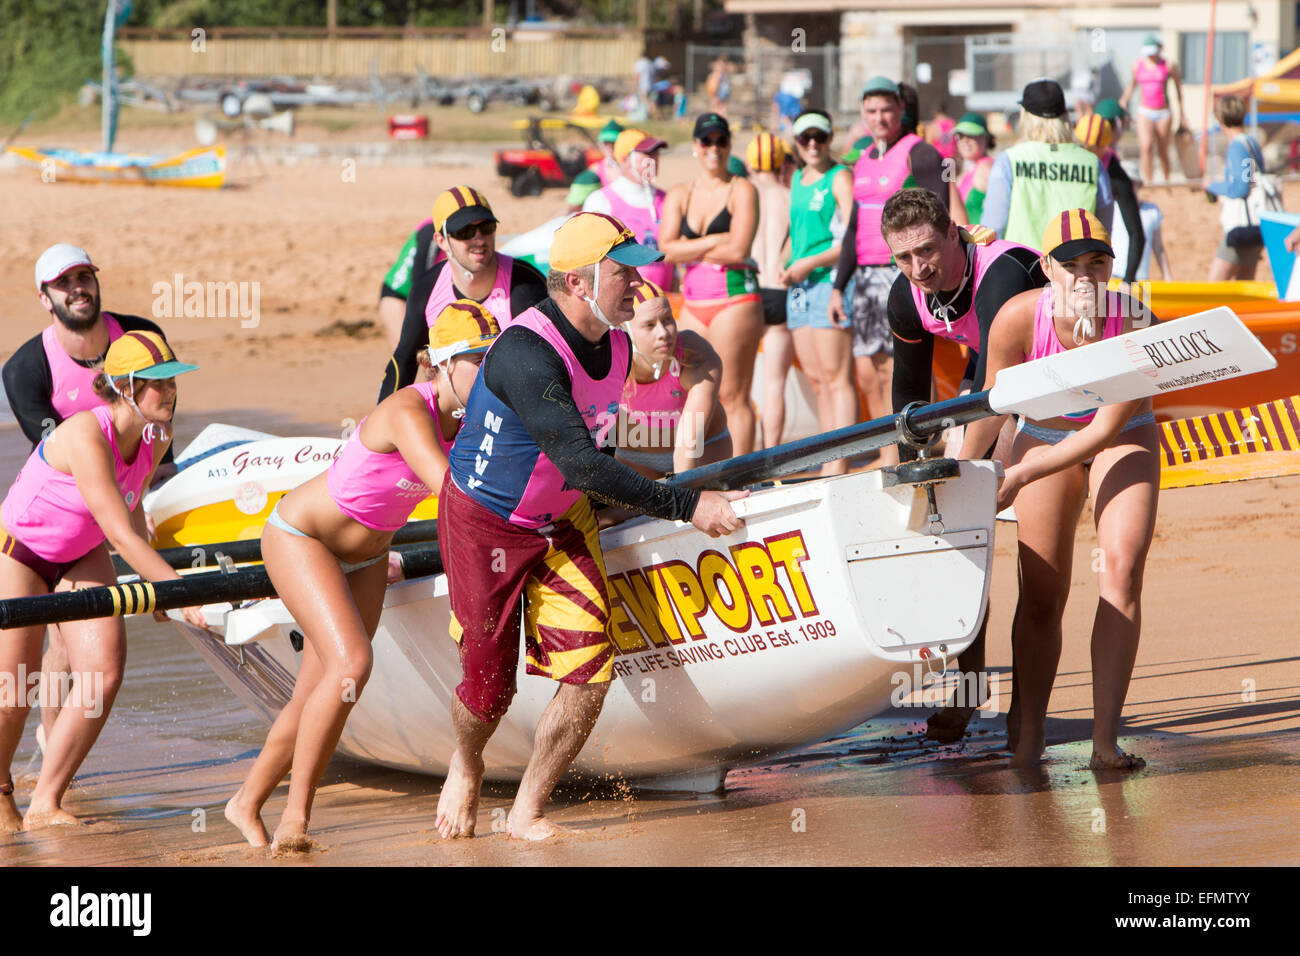 traditional surfboat racing event on sydney's bilgola beach,sydney,australia Stock Photo